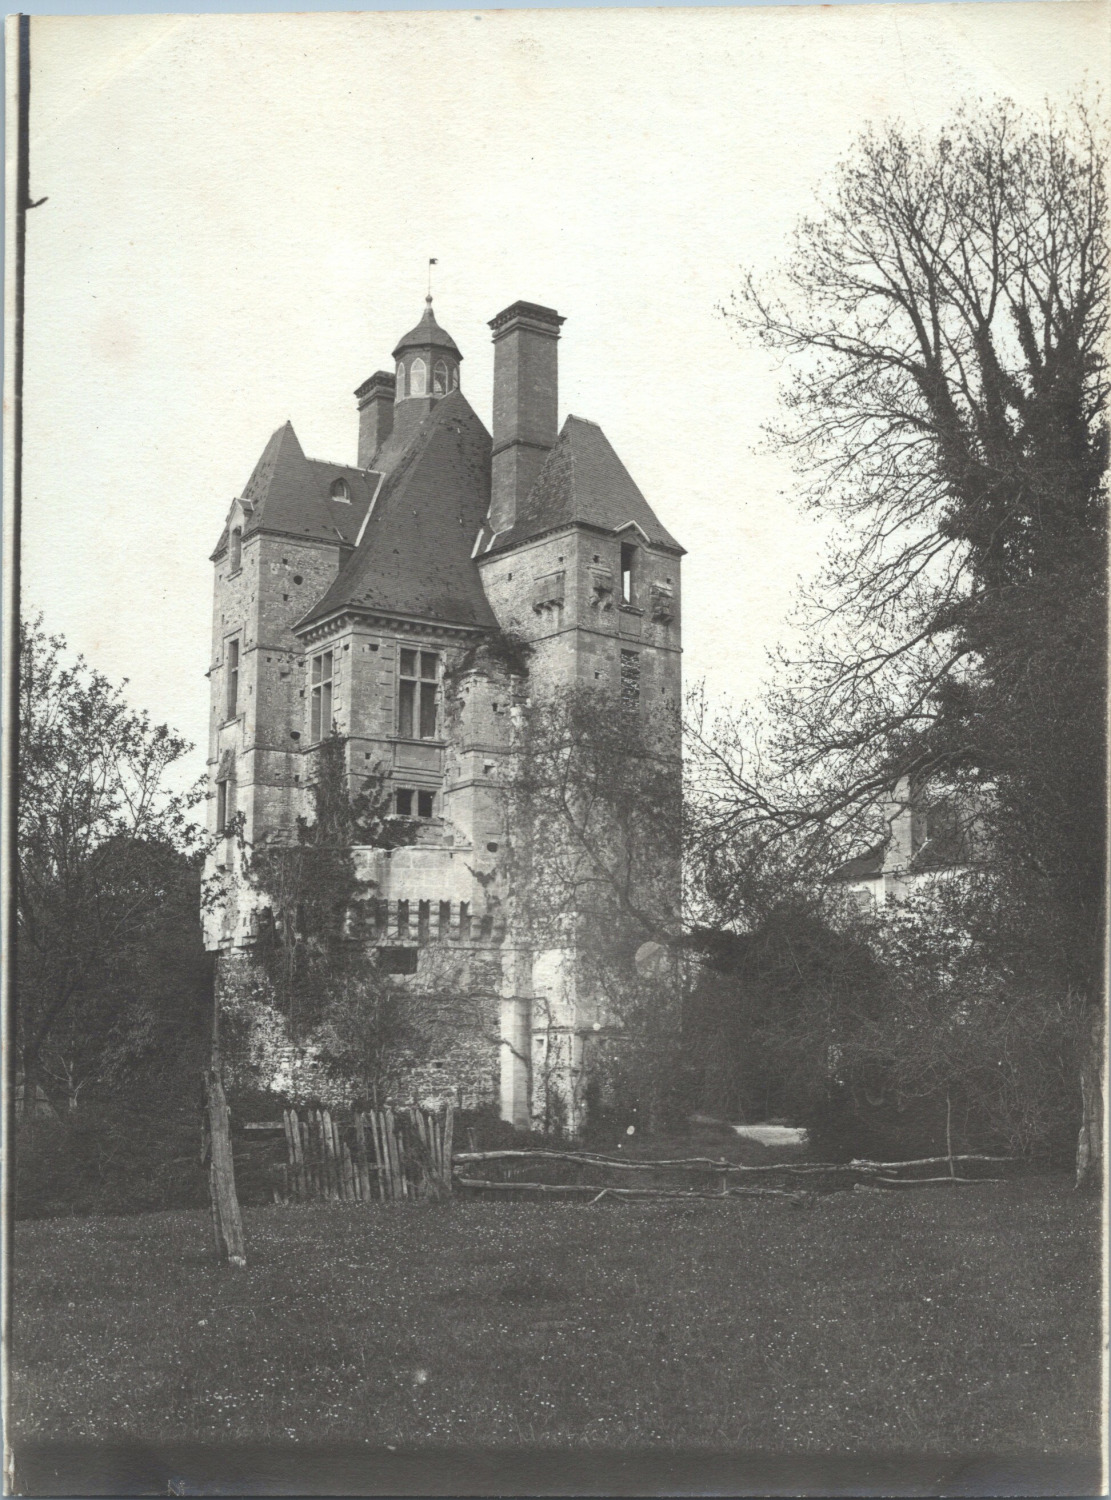 France, Château d'Aubry-en-Exmes, vintage print, ca.1900 vintage print print